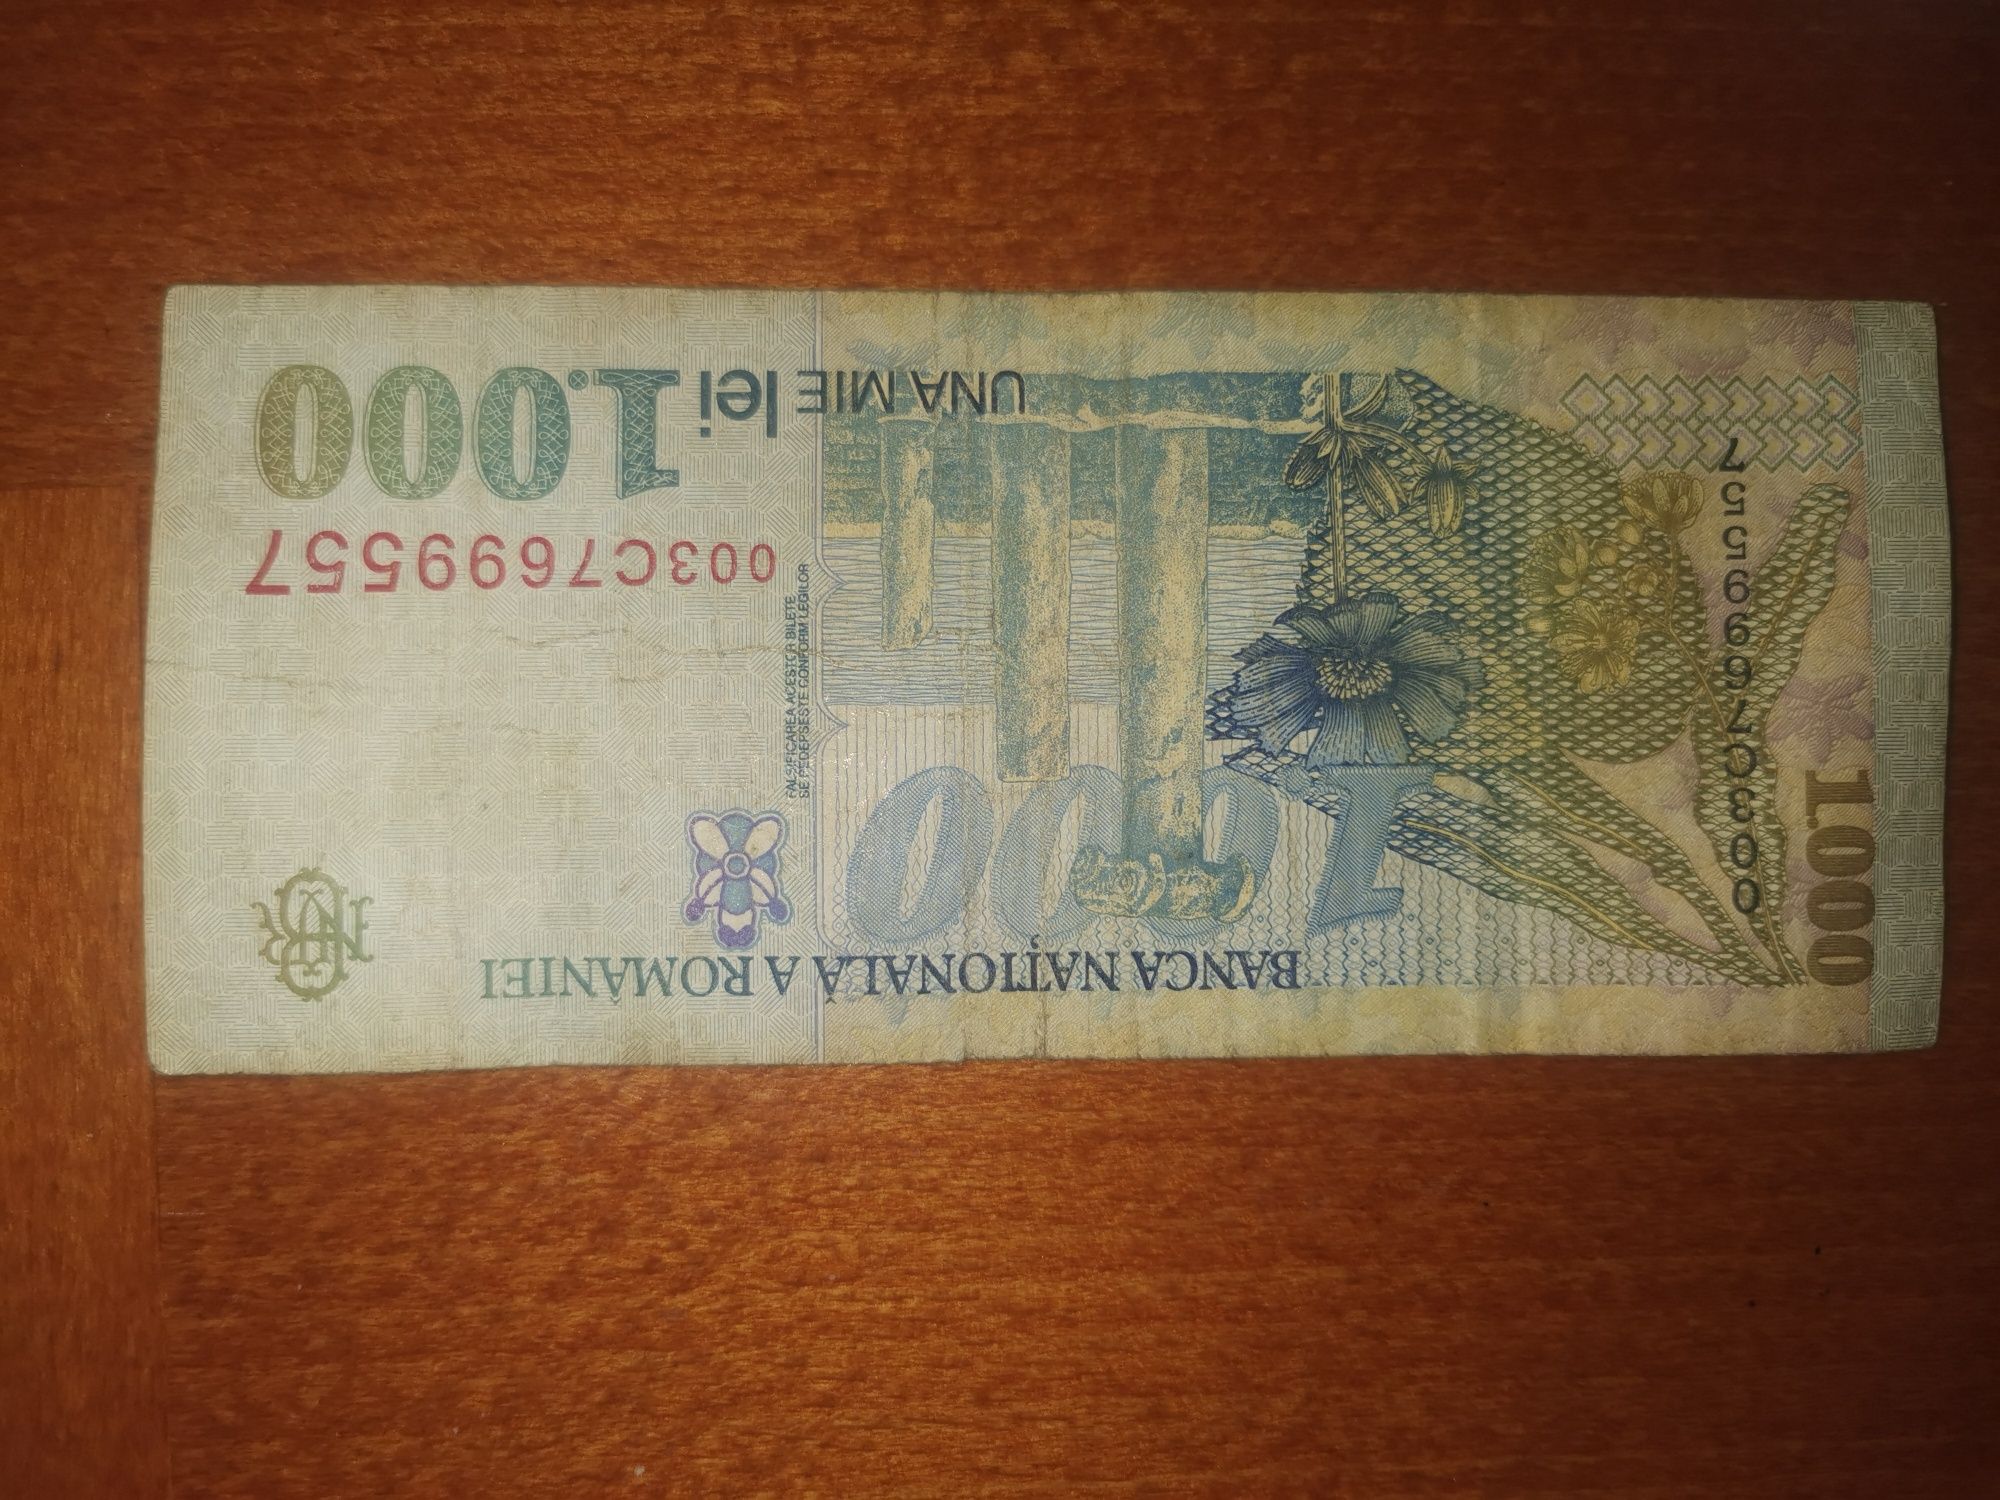 Bancnota 1000 lei